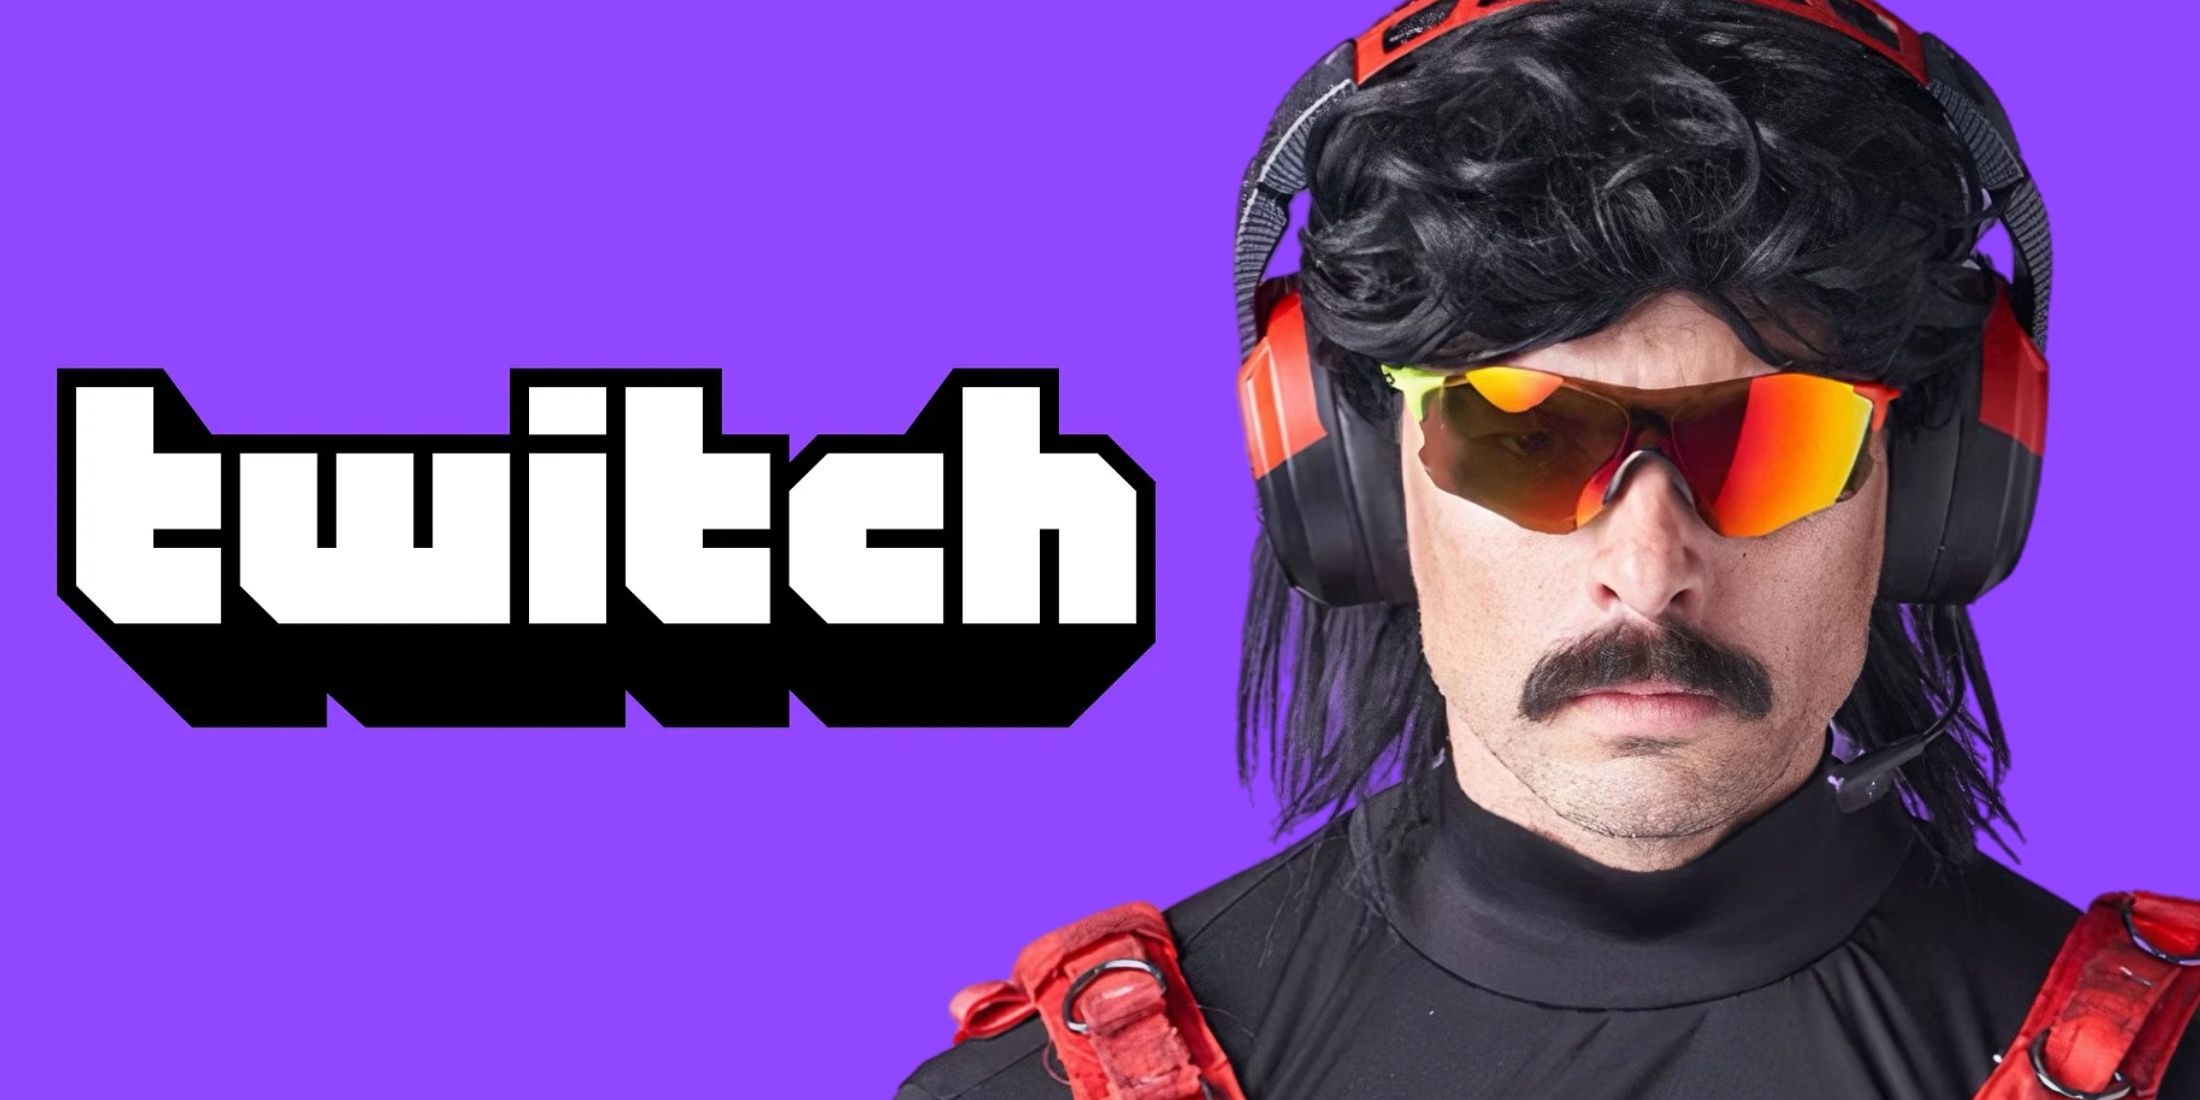 twitch-dr-disrespect-head-shot-logo-purple-background